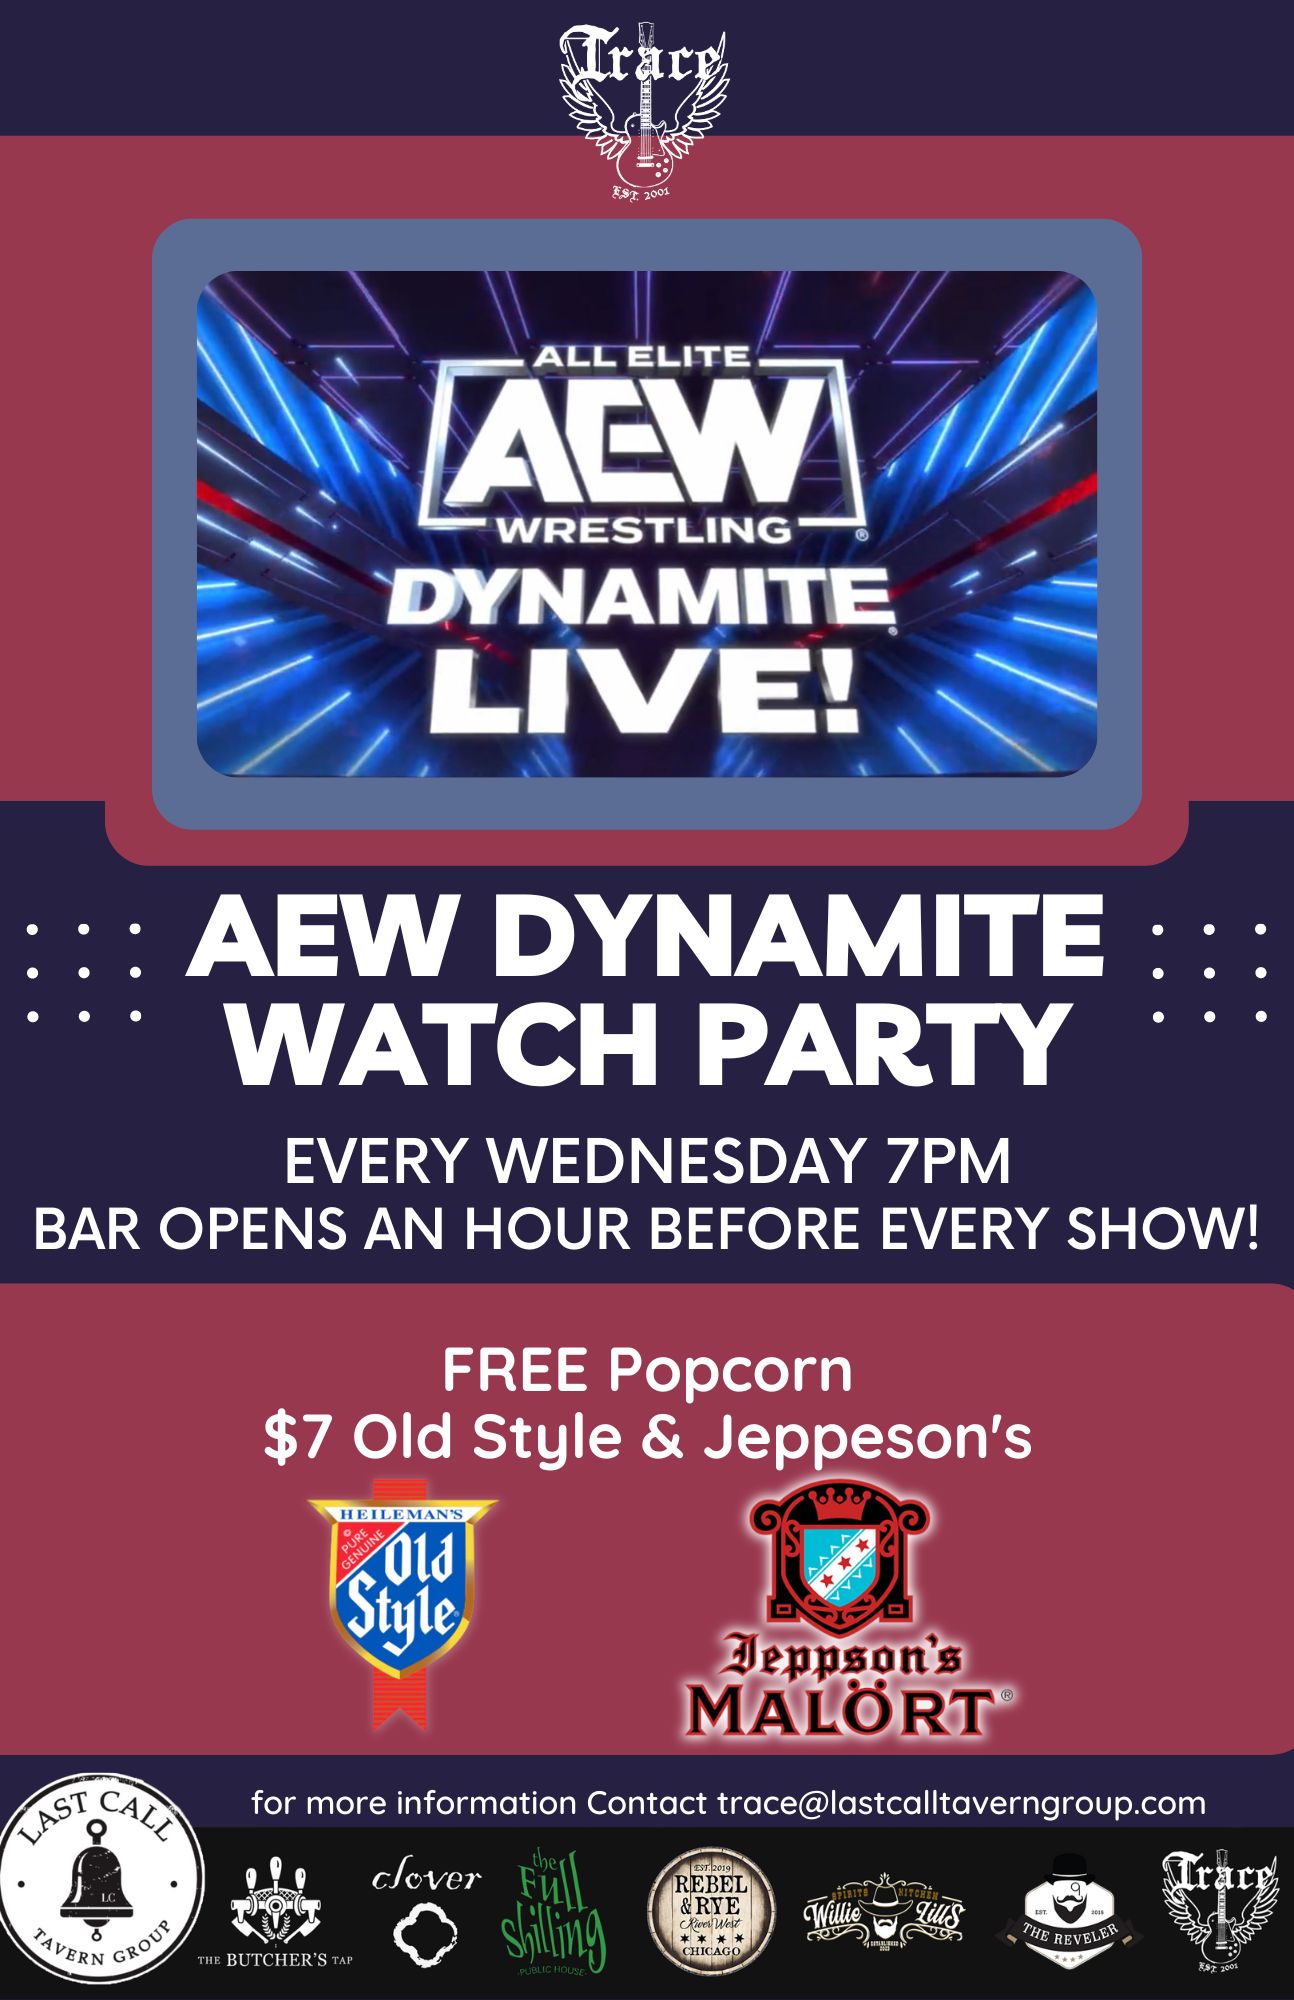 AEW Dynamite Watch Party @ Trace